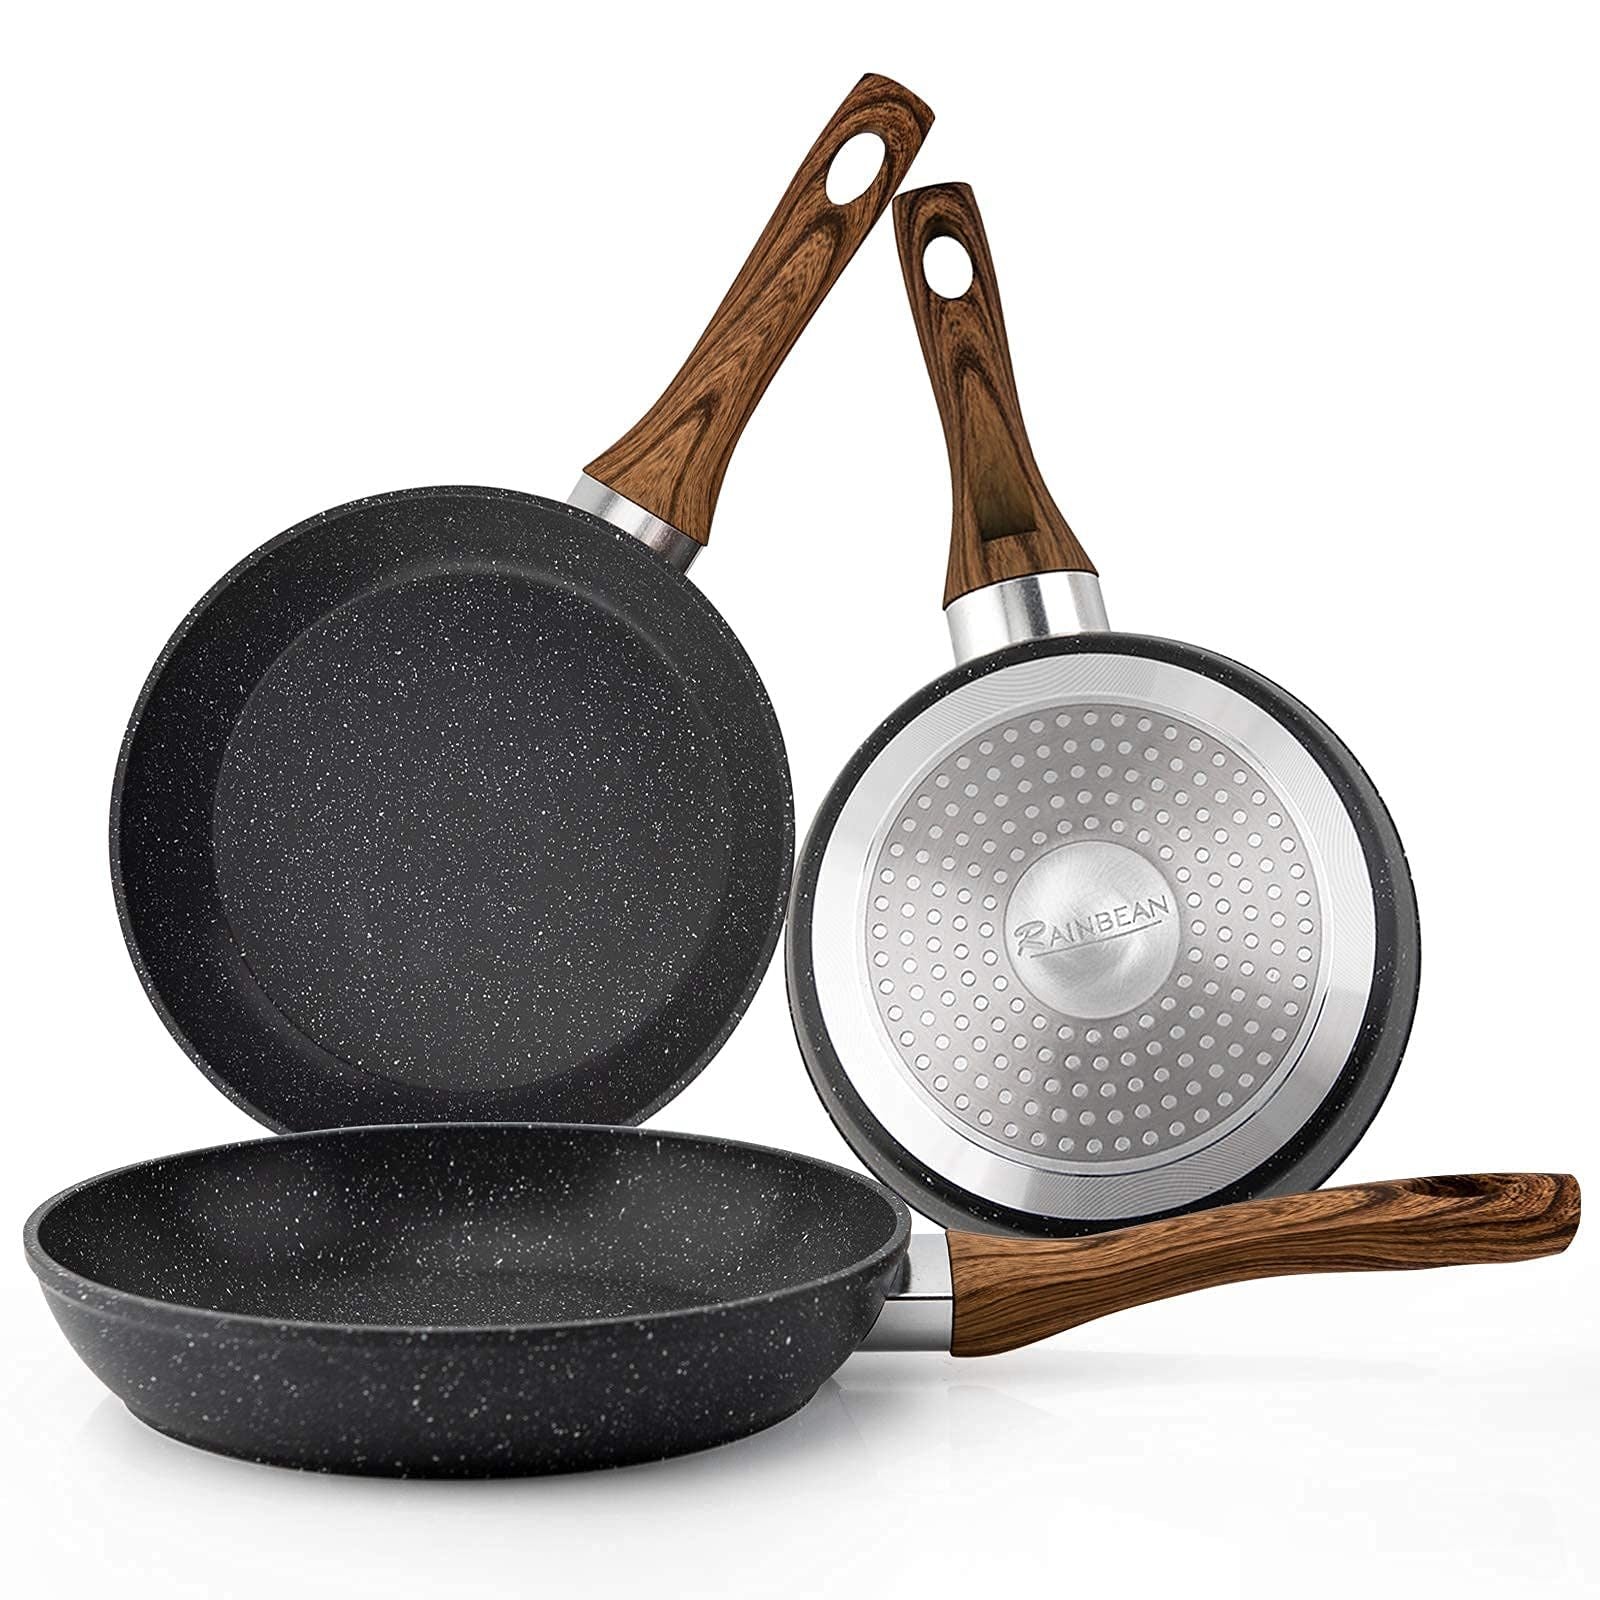 RAINBEAN Frying Pan Set 3-Piece Nonstick Saucepan Woks Cookware Set,Heat-Resistant Ergonomic Wood Effect Bakelite Handle Design,PFOA Free.(7/8/9.5 inch)